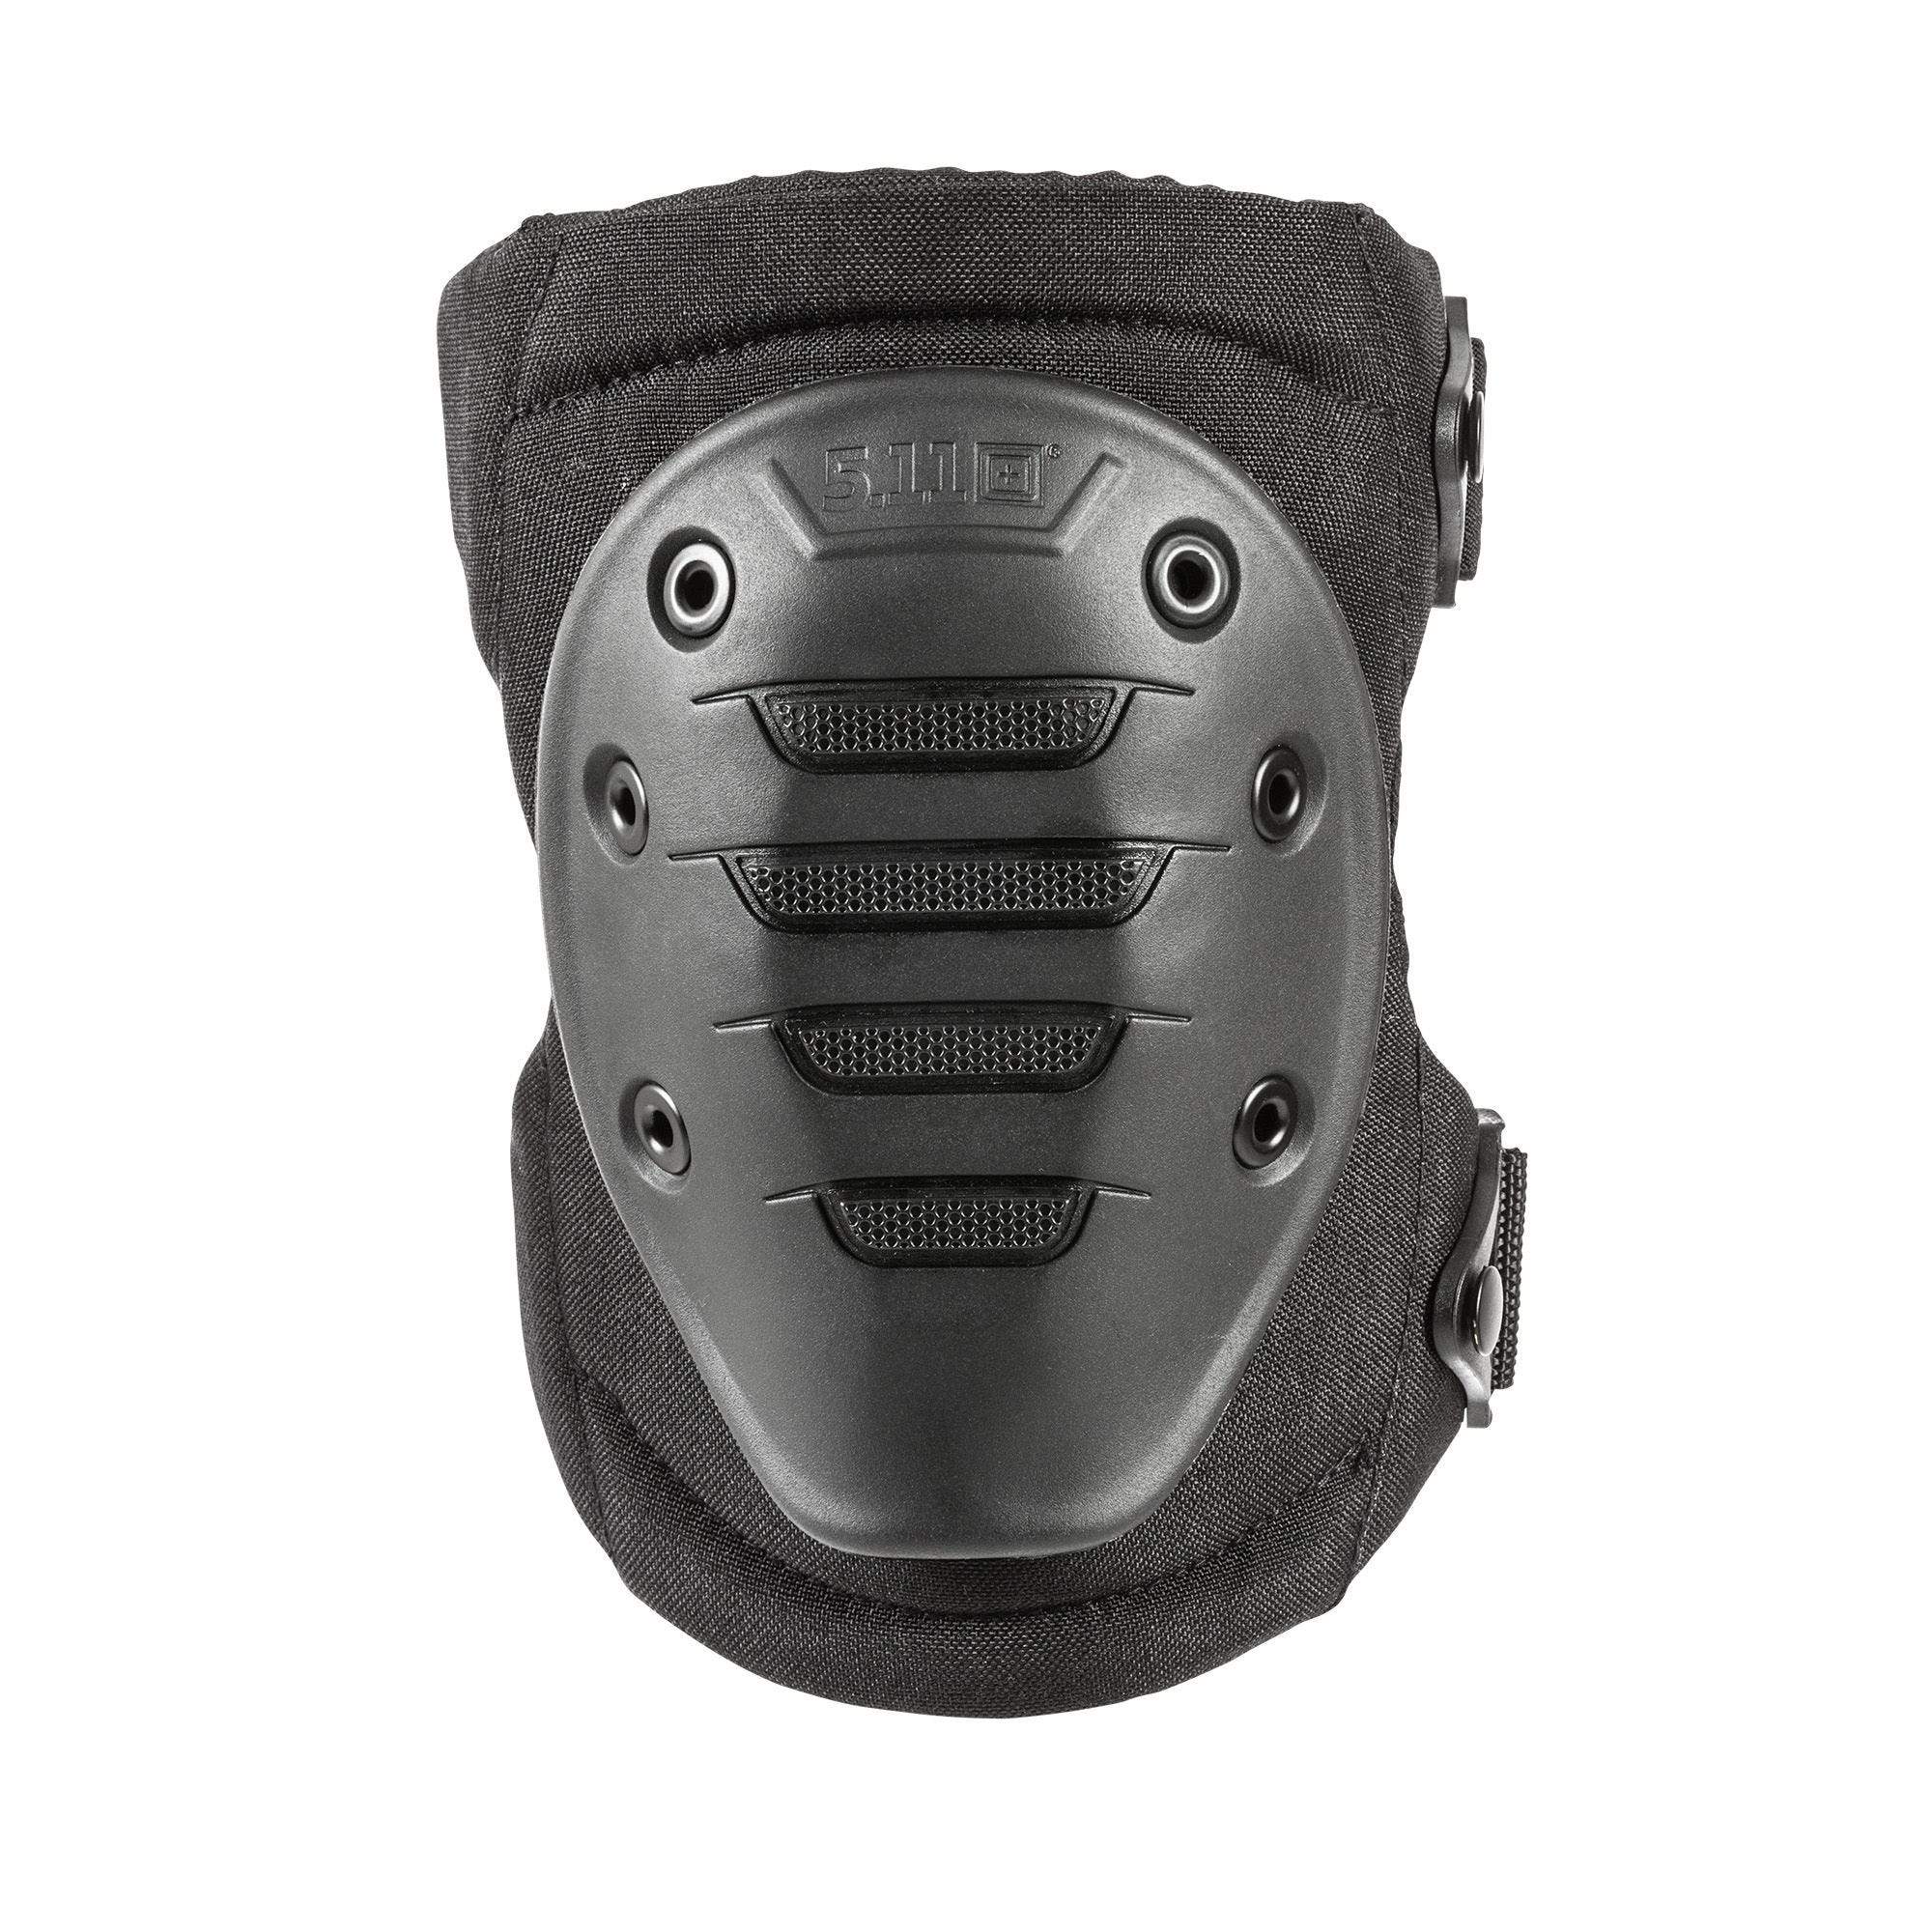 5.11 Tactical EXO.K1 External Knee Pad Knee & Elbow Protection 5.11 Tactical Black Tactical Gear Supplier Tactical Distributors Australia